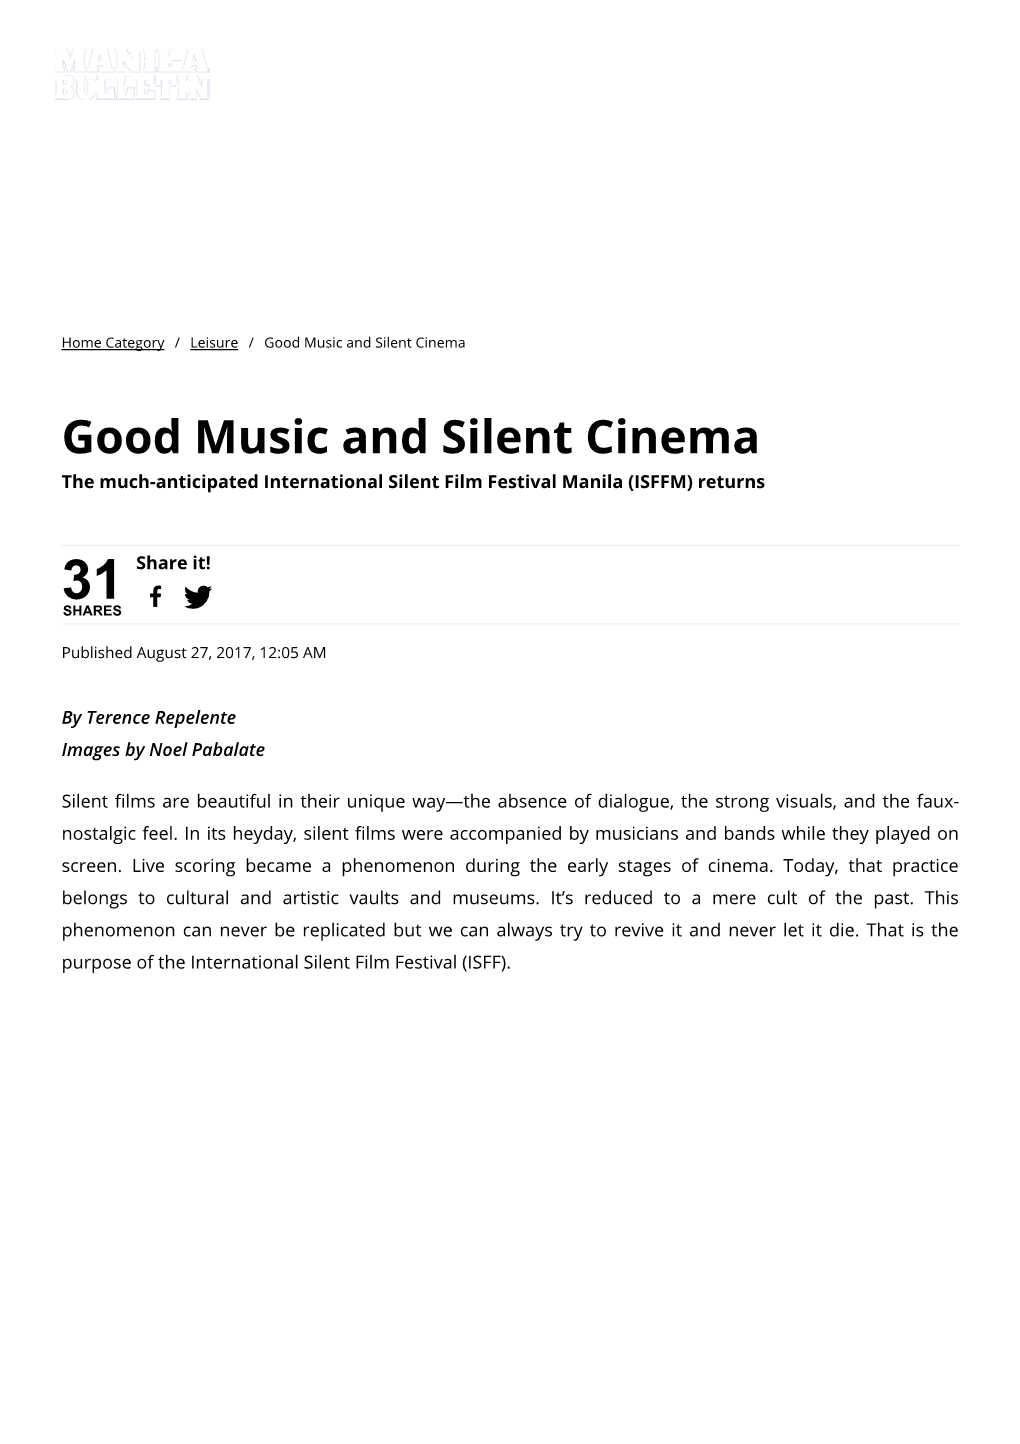 Good Music and Silent Cinema